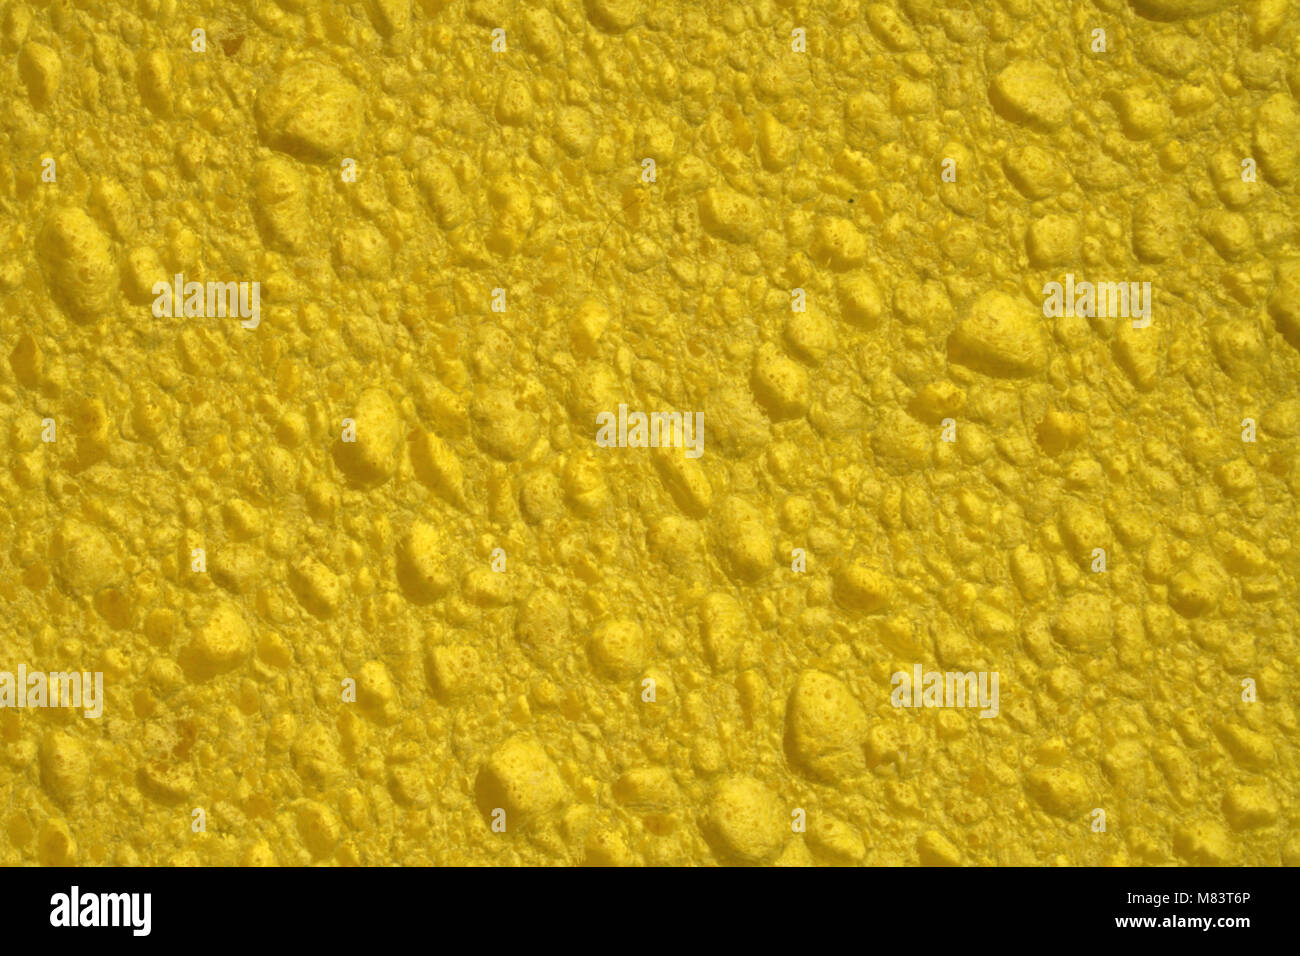 close up of a Yellow sponge Stock Photo